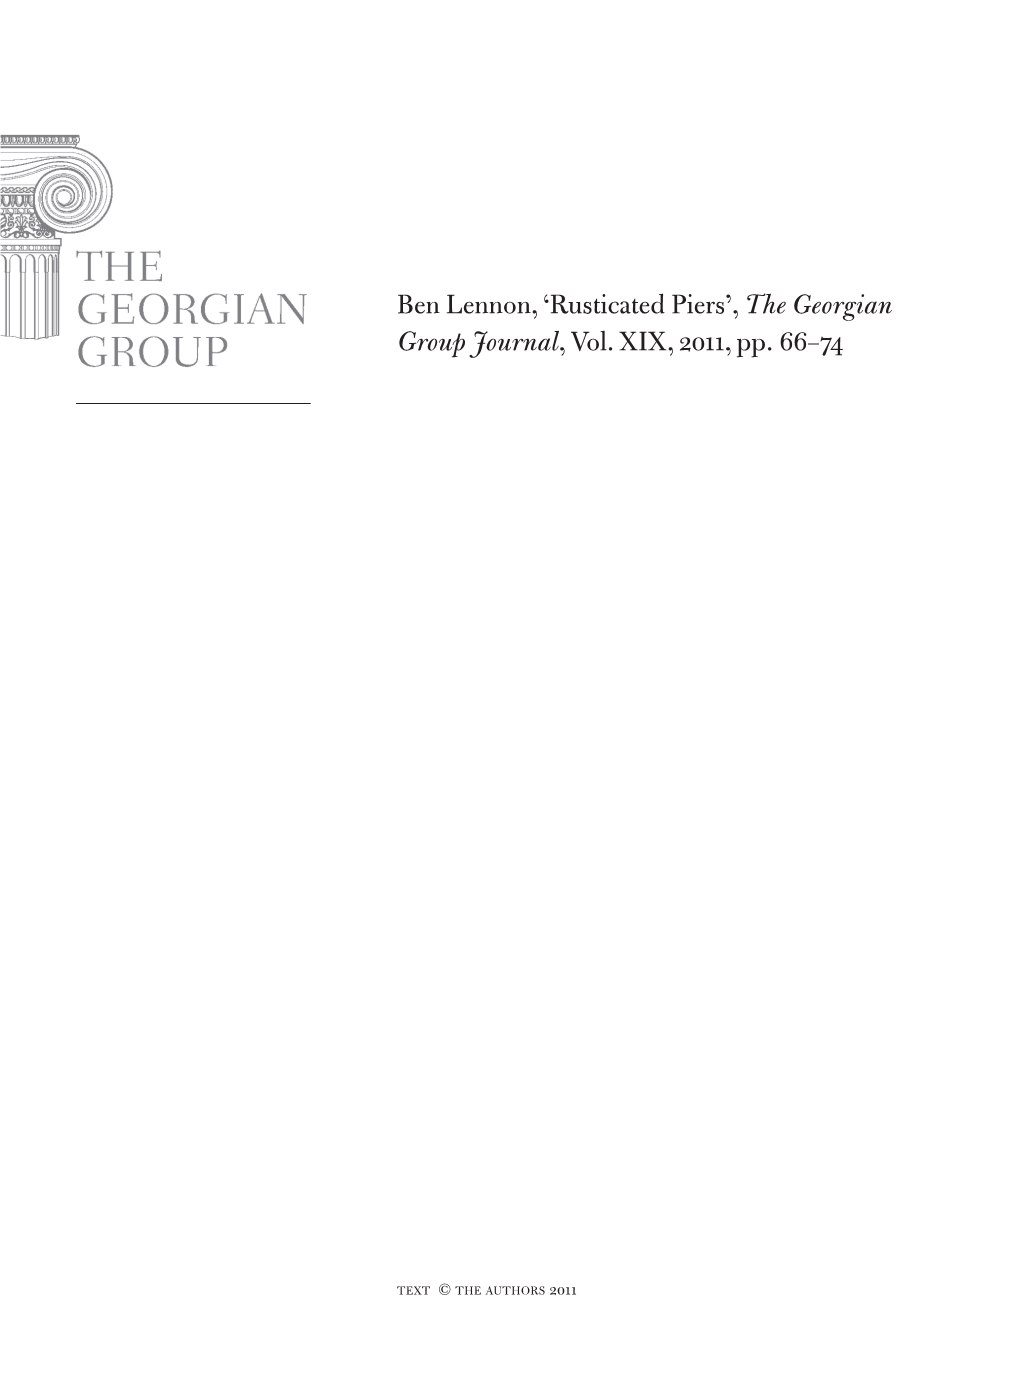 Ben Lennon, 'Rusticated Piers', the Georgian Group Journal, Vol. Xix